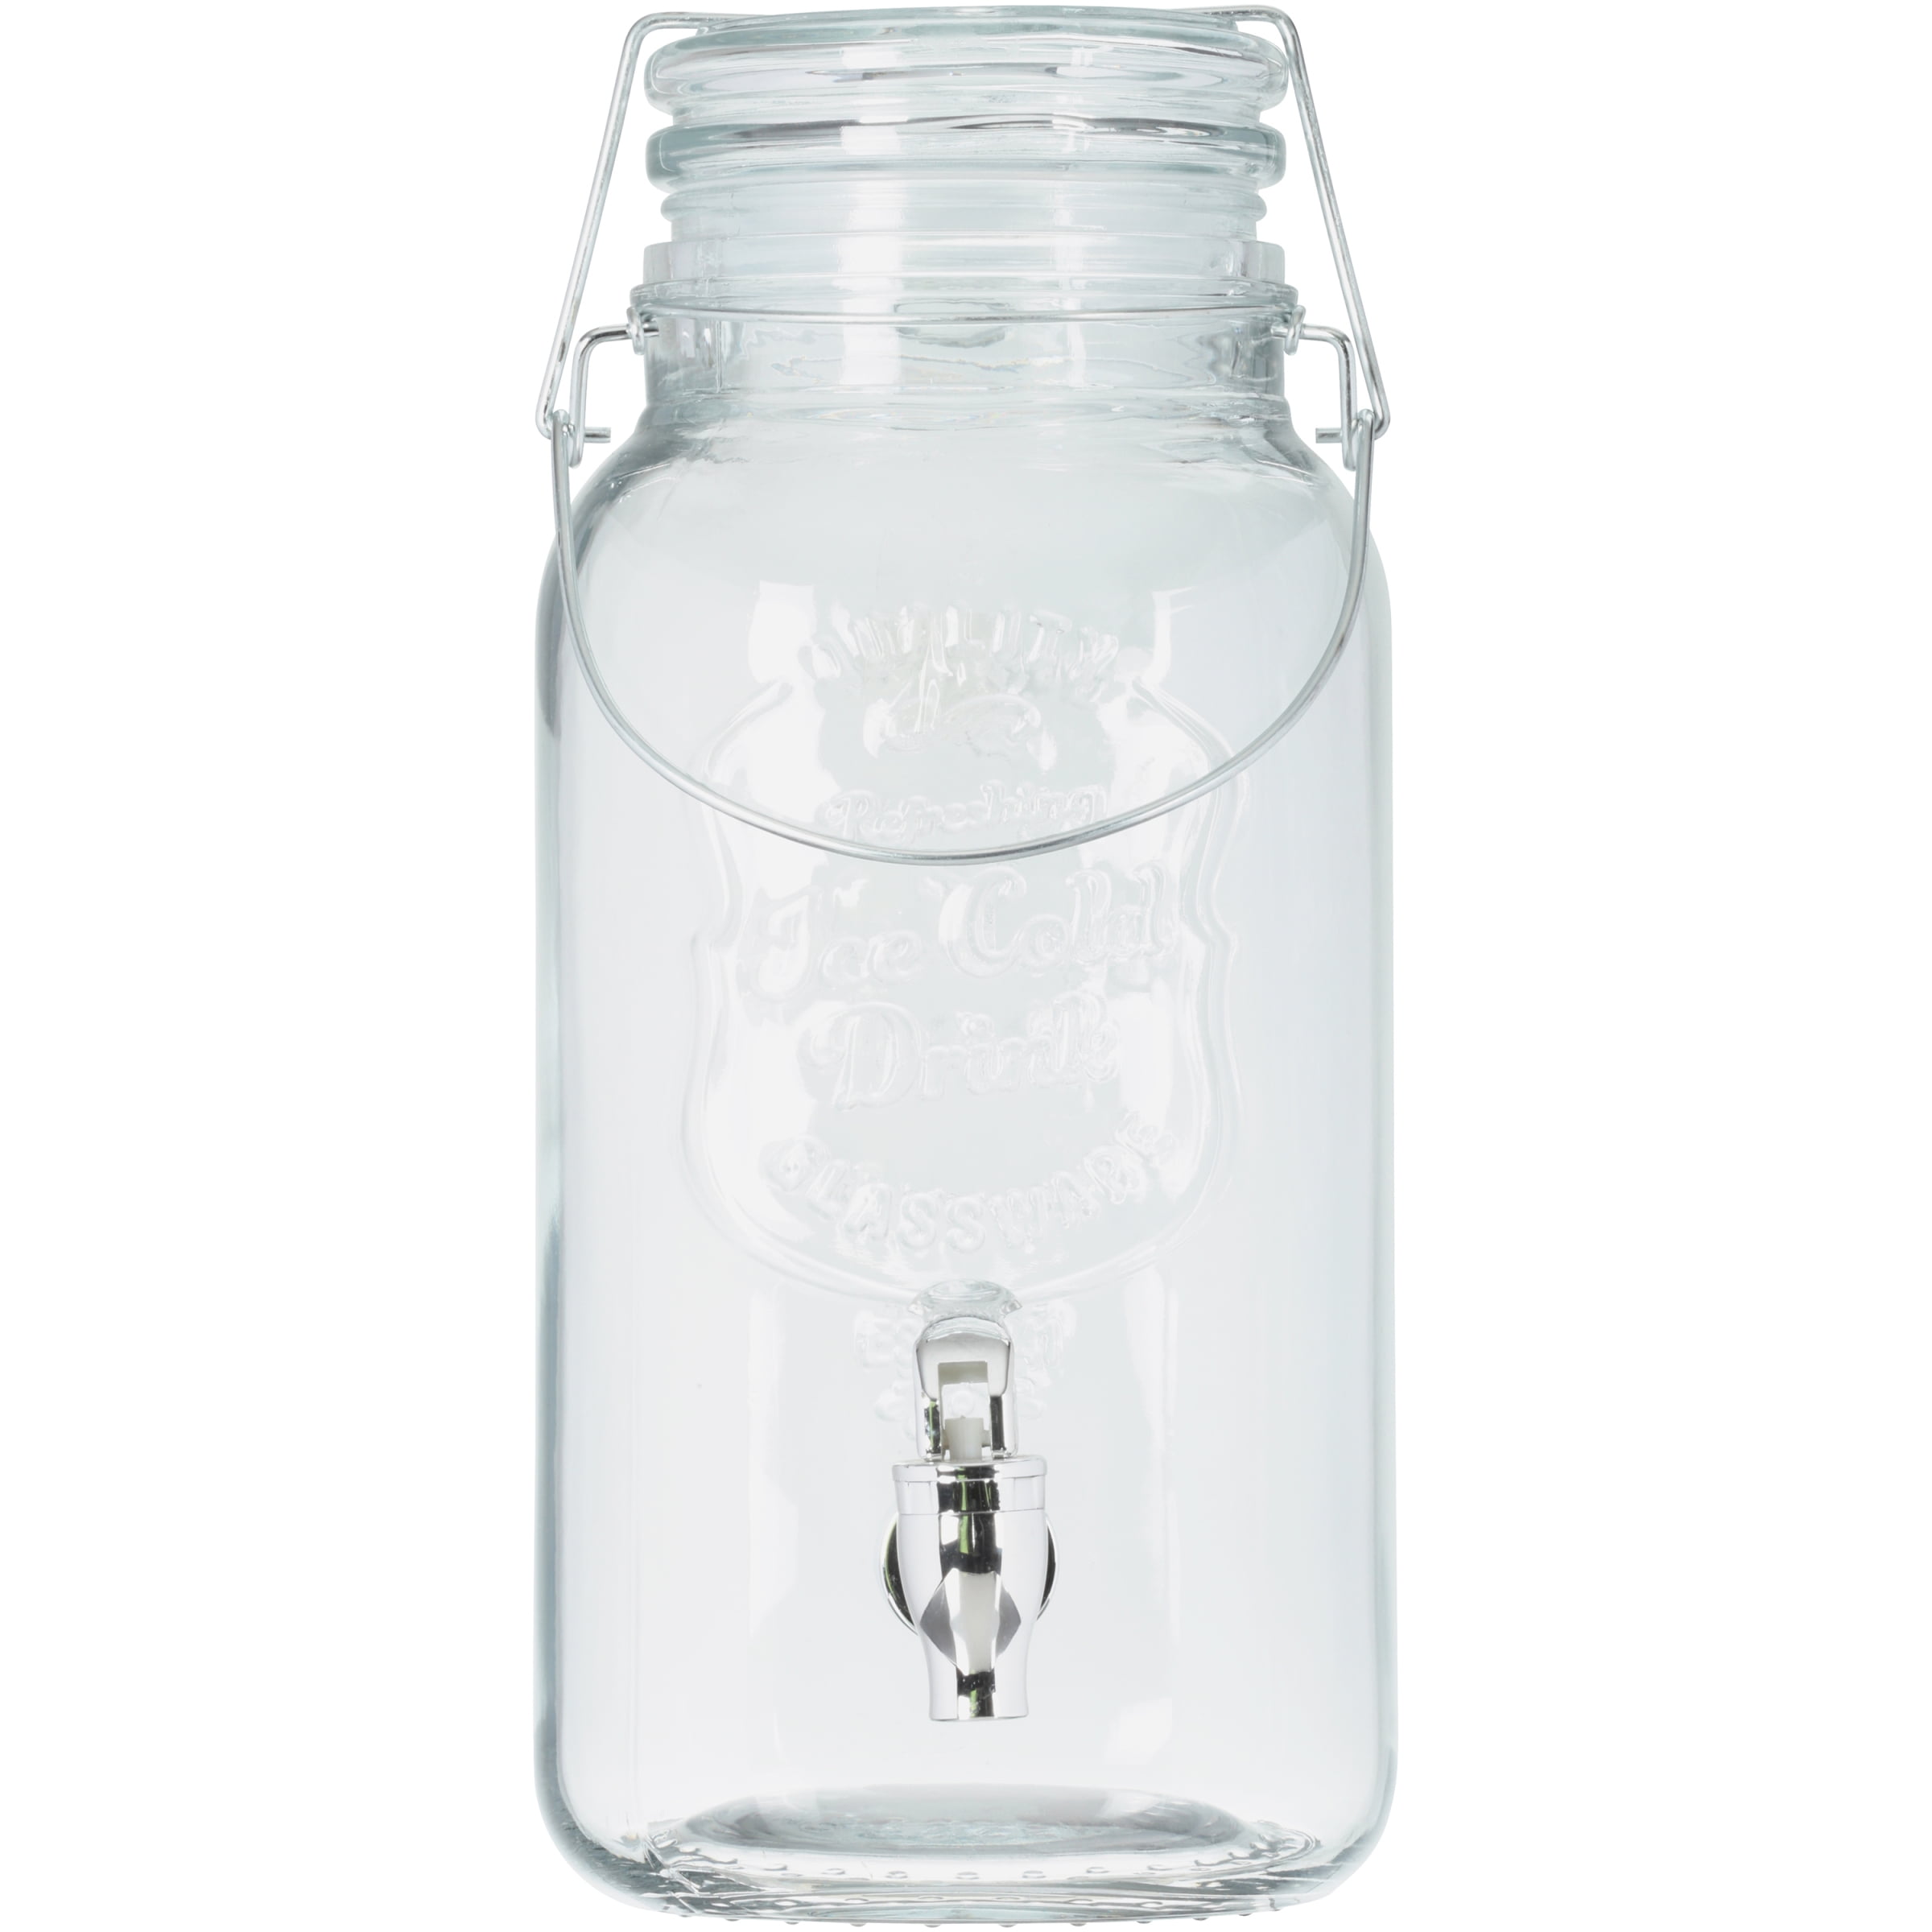 1 Gallon Beverage Dispenser,Glass mason jar drink dispenser,water dispenser with Stand and Leak Free Spigot,lemonade dispenser,Clear